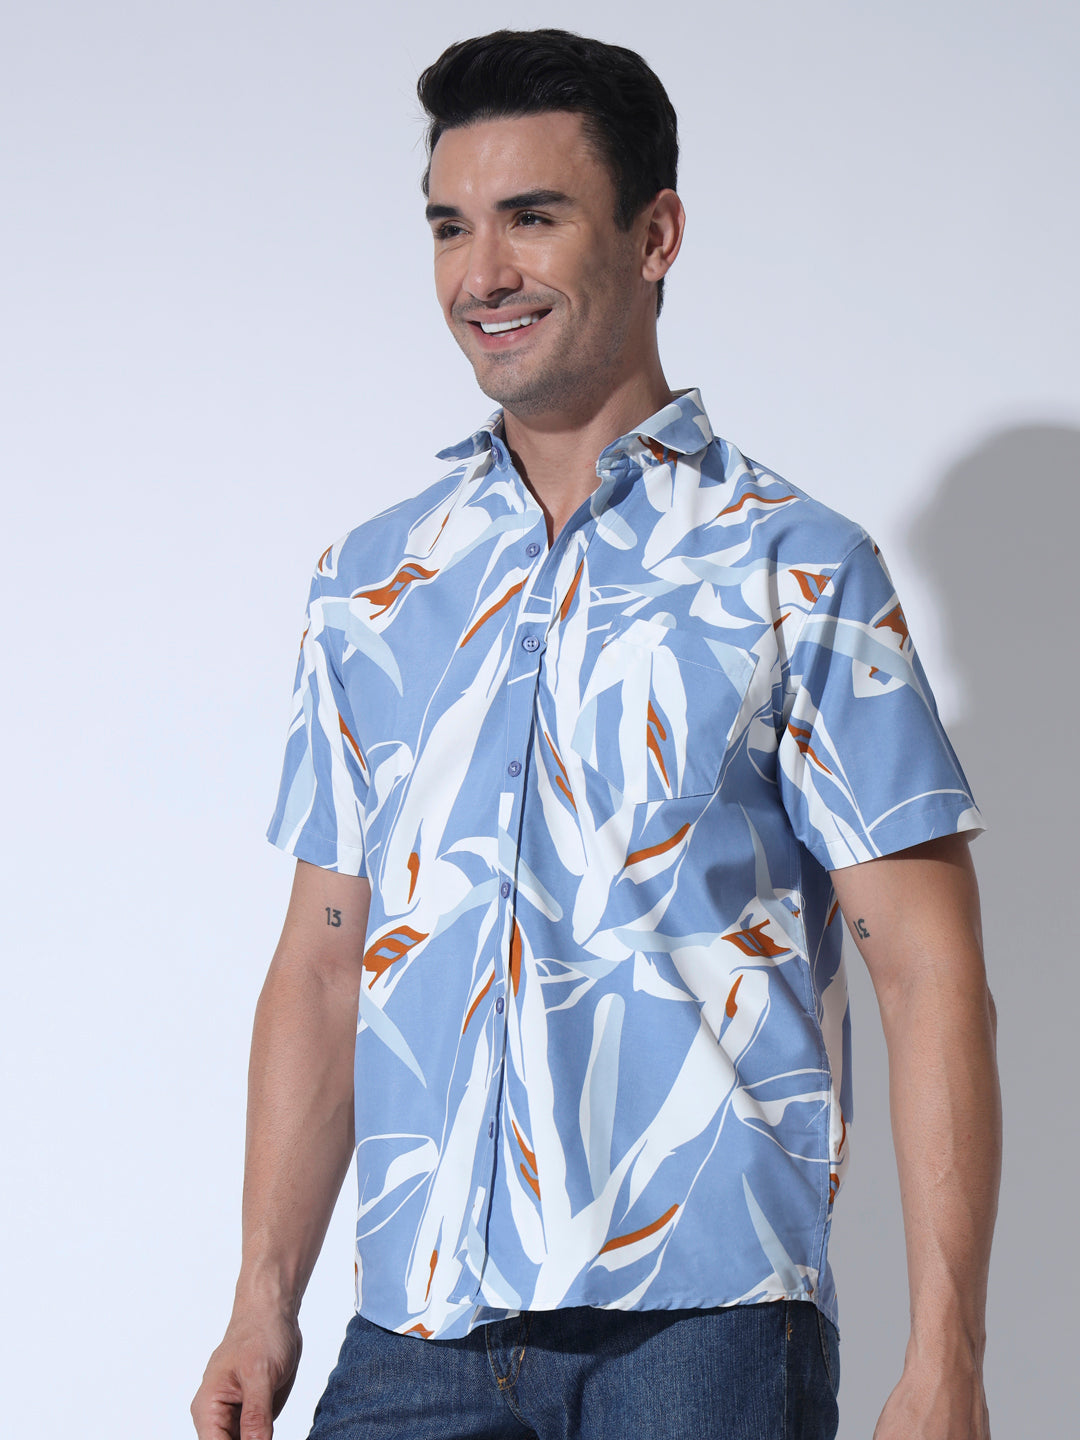 Summer Twig Bluish Printed Shirt